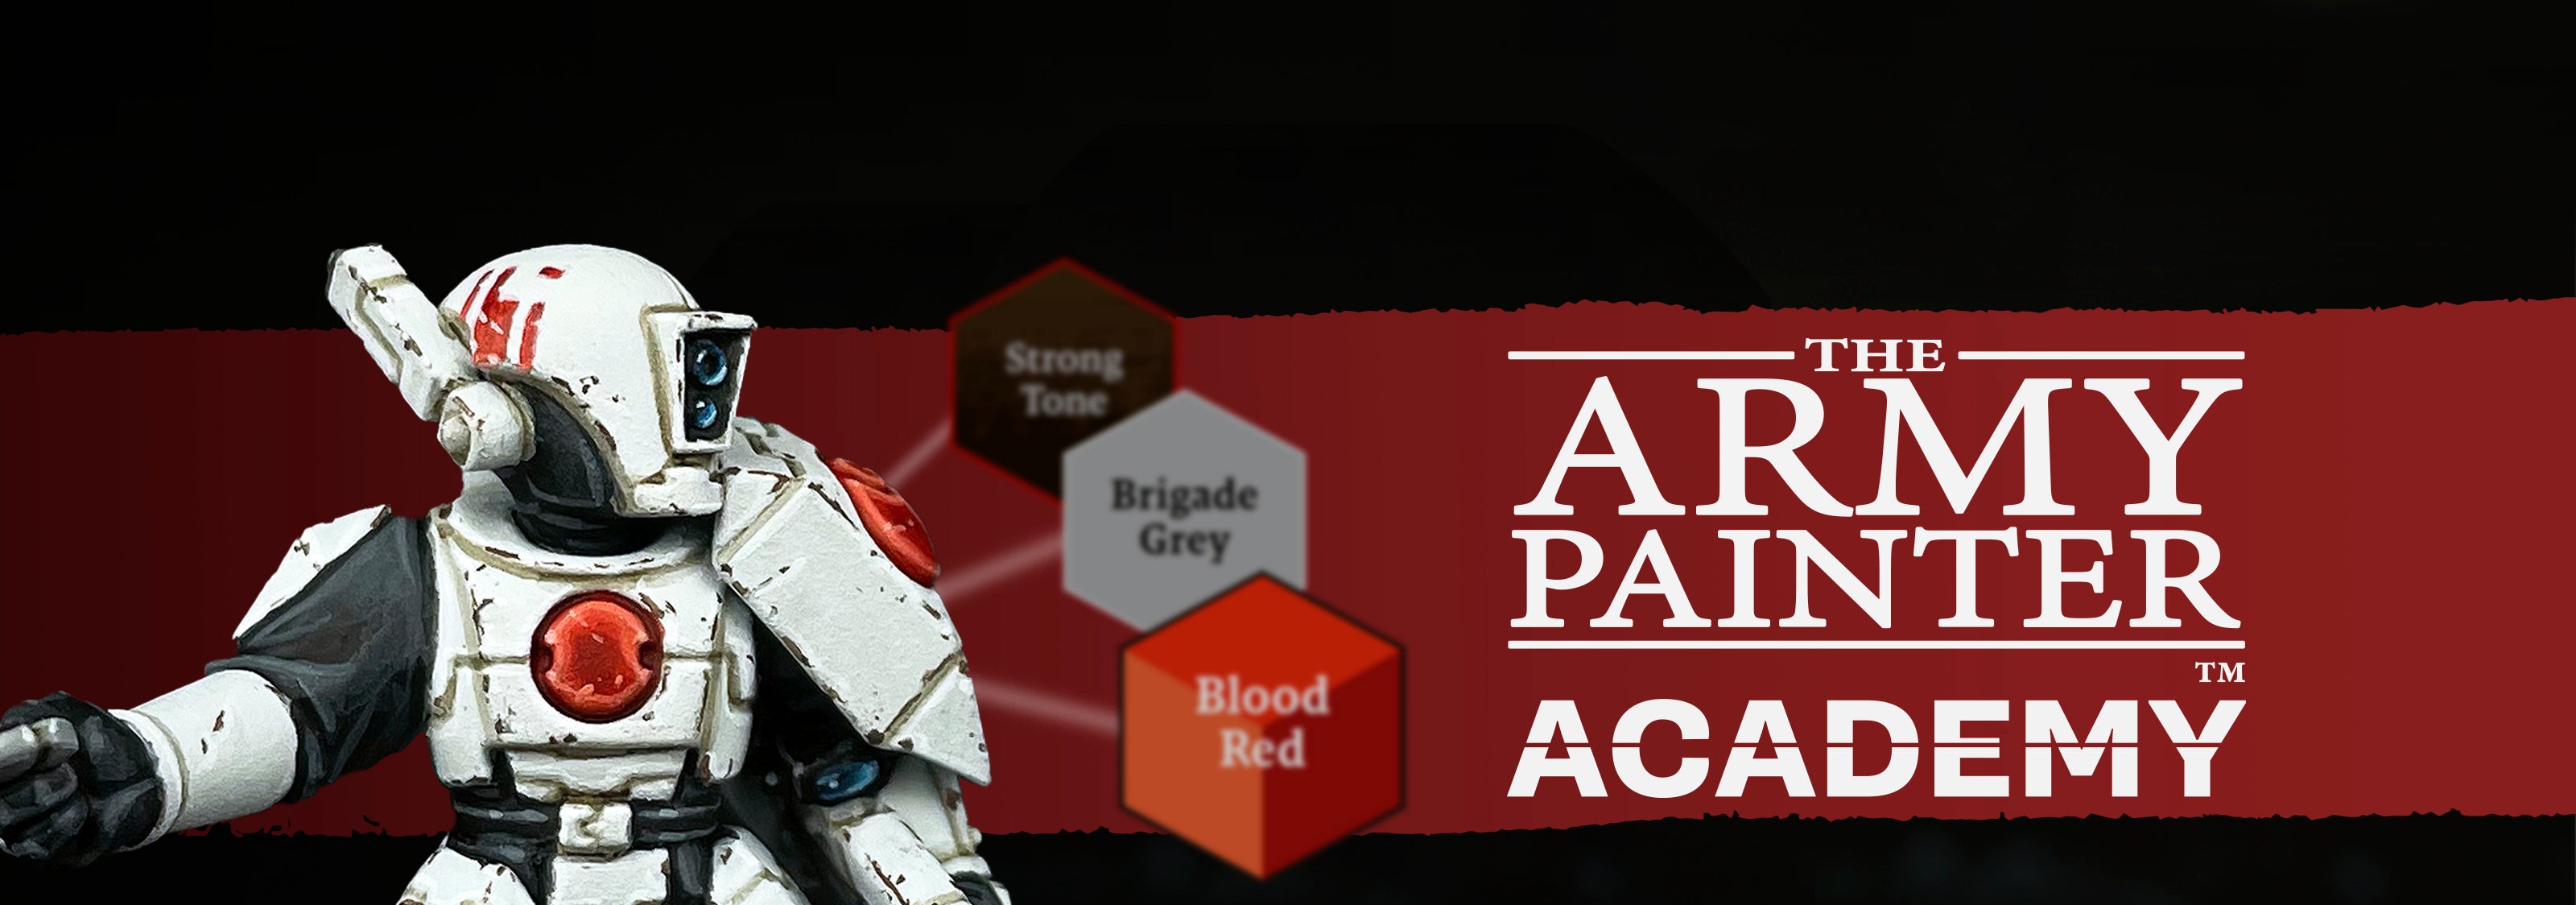 T'au Fire Warrior Army Paintier Academy